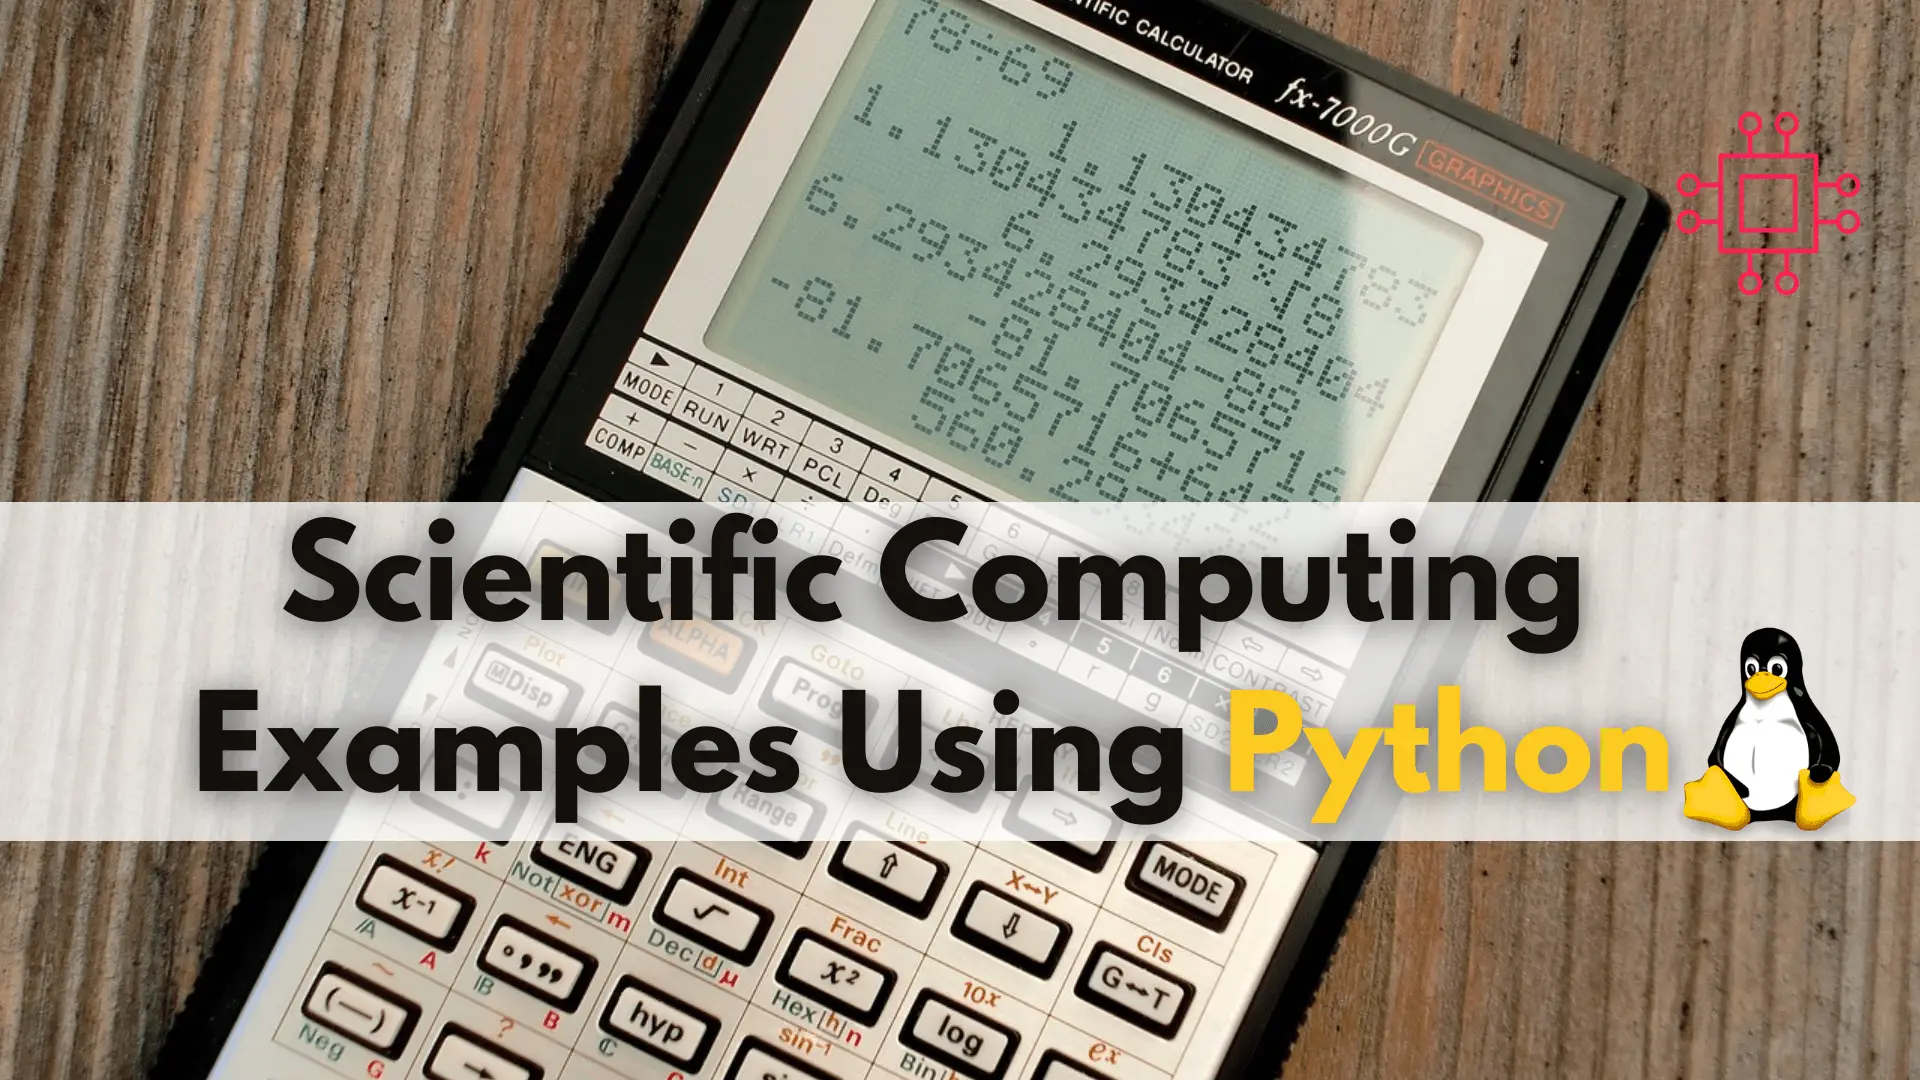 Scientific computing examples using Python